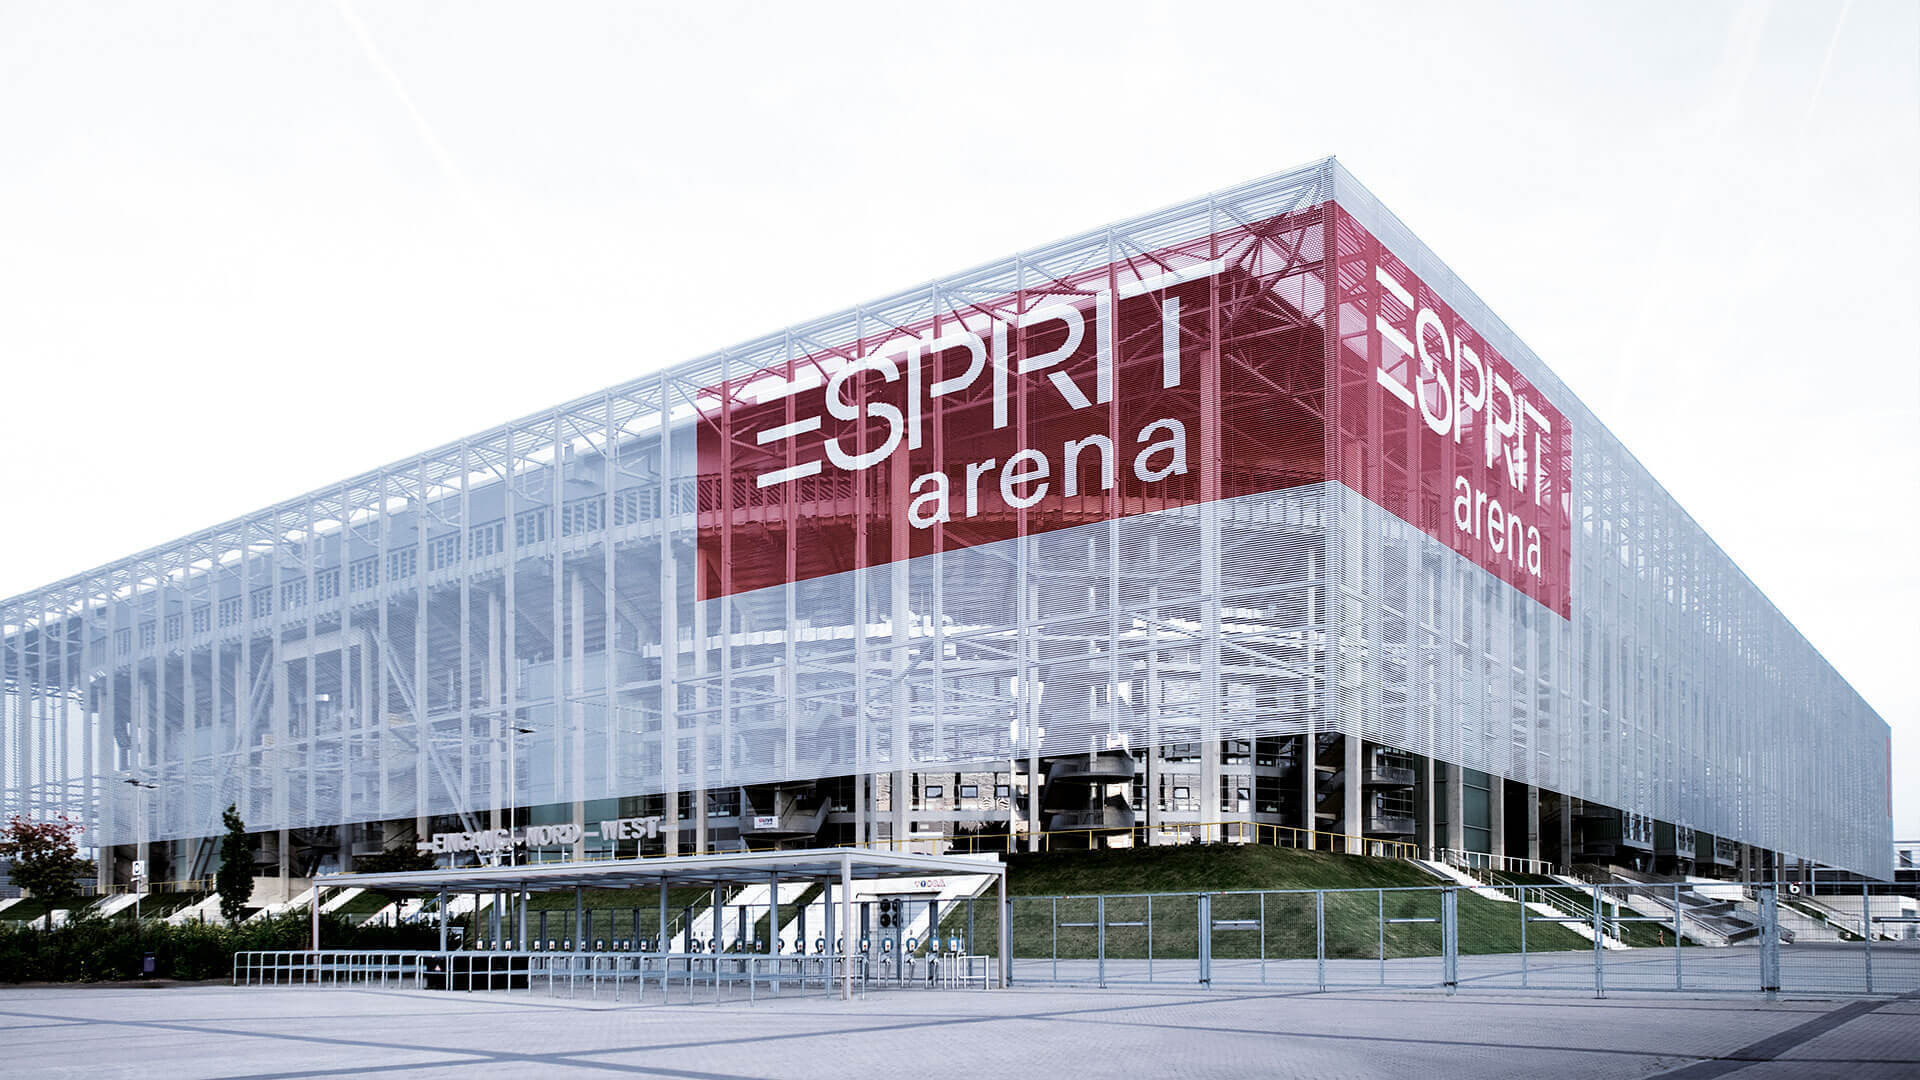 The Big Air event in Düsseldorf had been due to take place in the Espirit Arena ©SOP Architekten